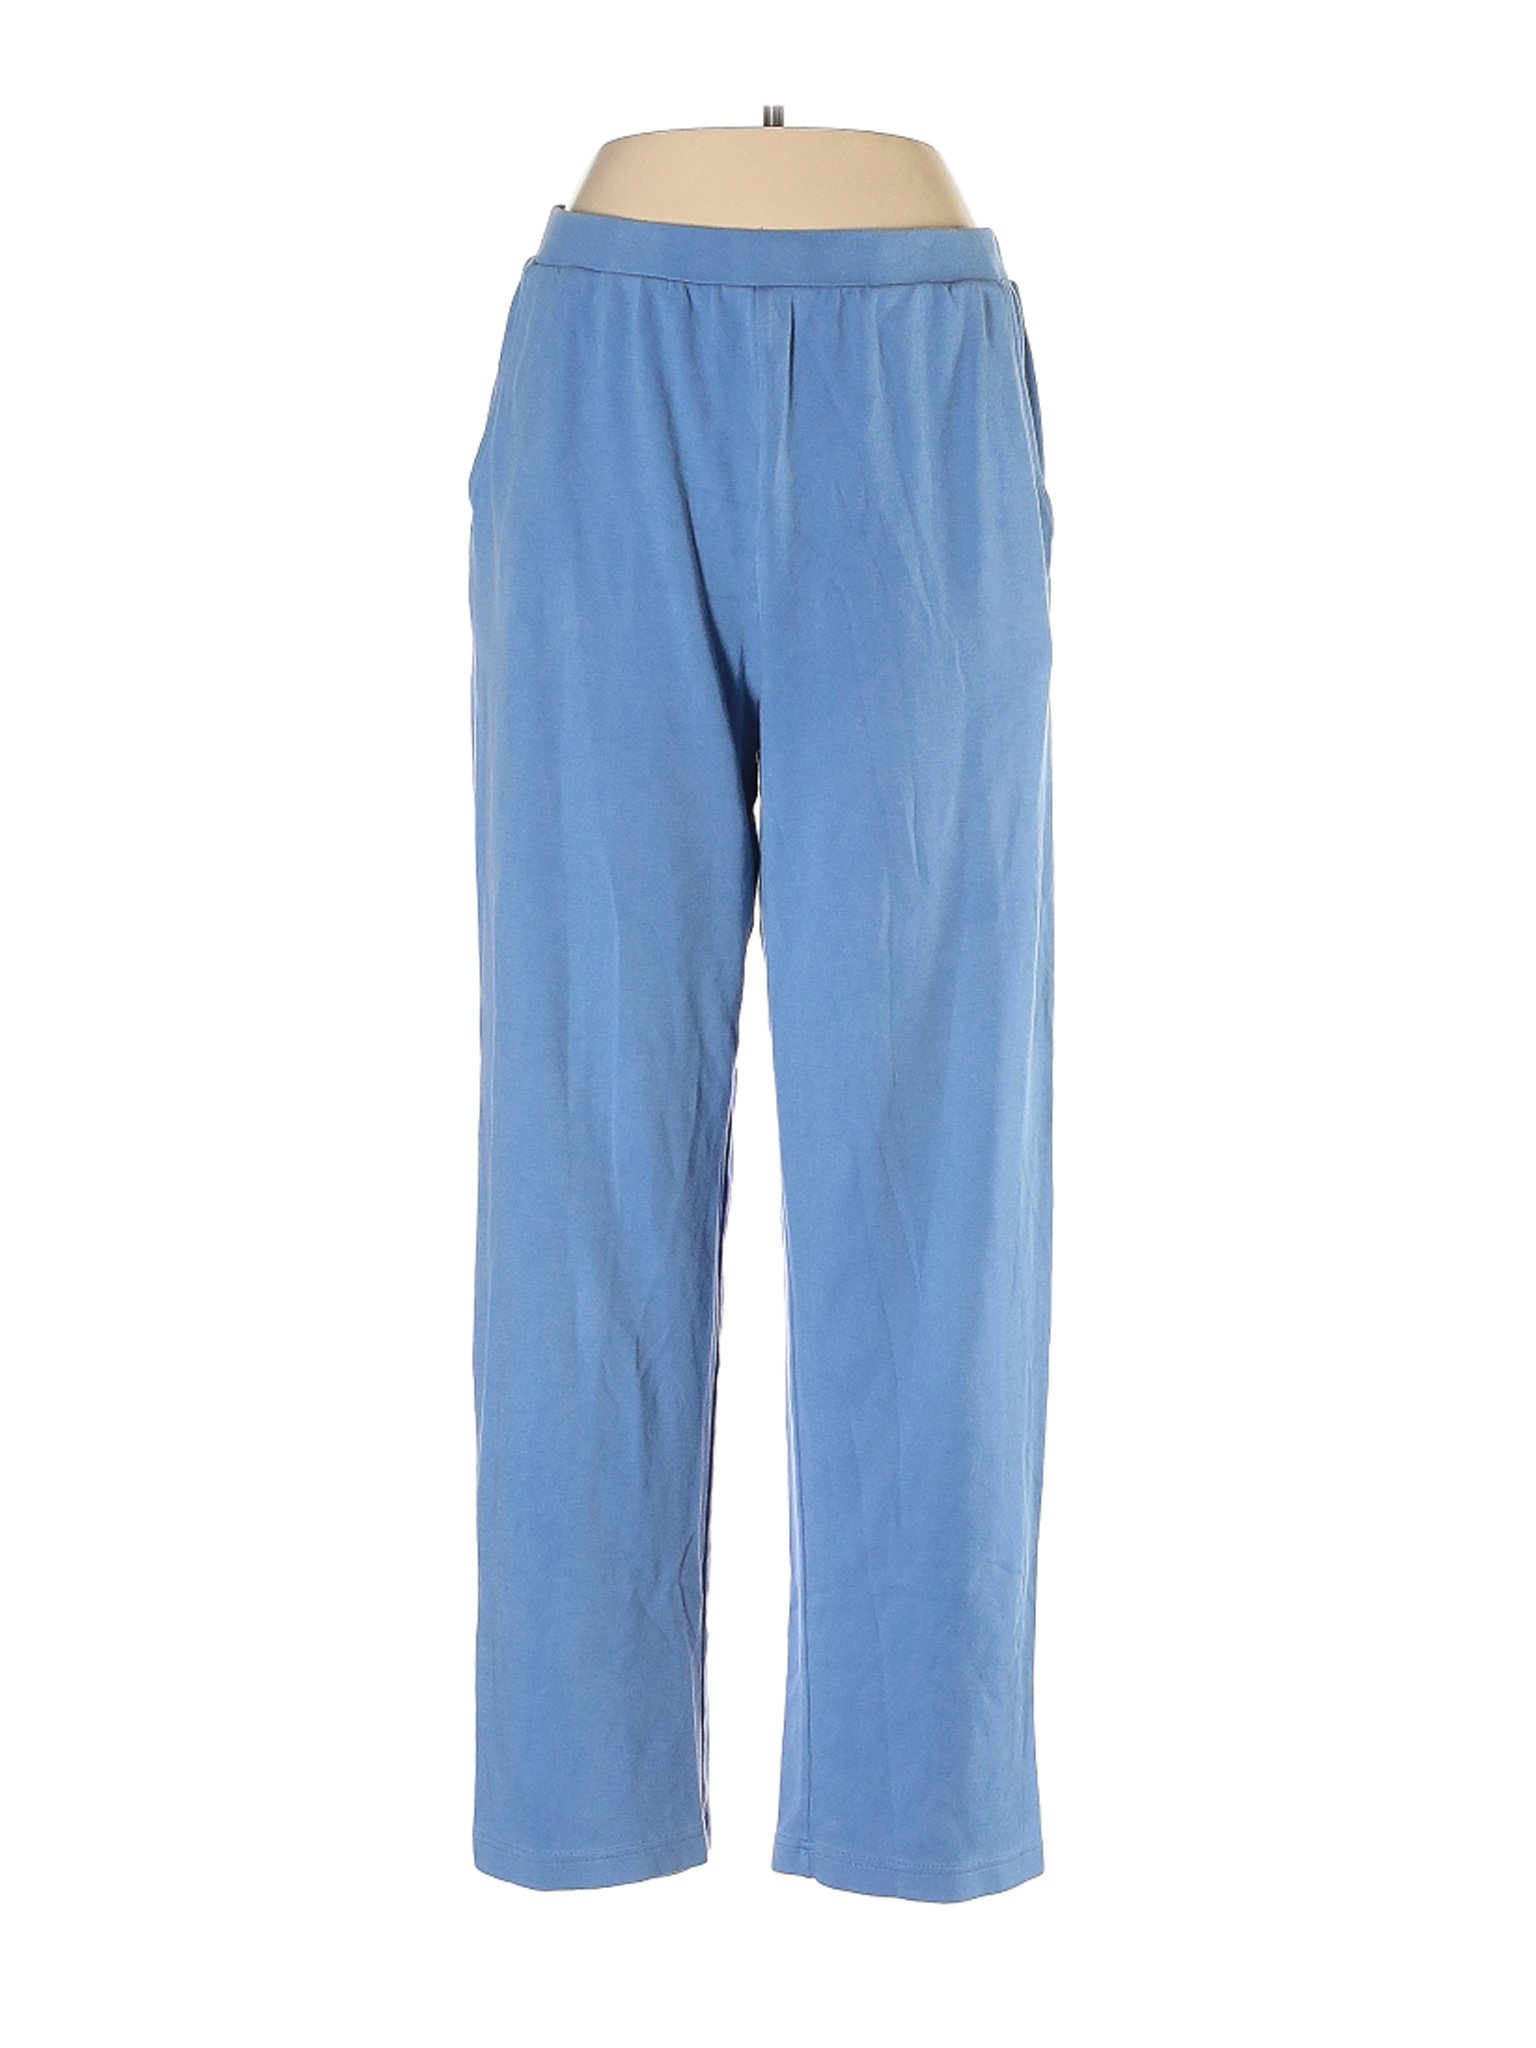 Appleseeds Women Blue Casual Pants M | eBay